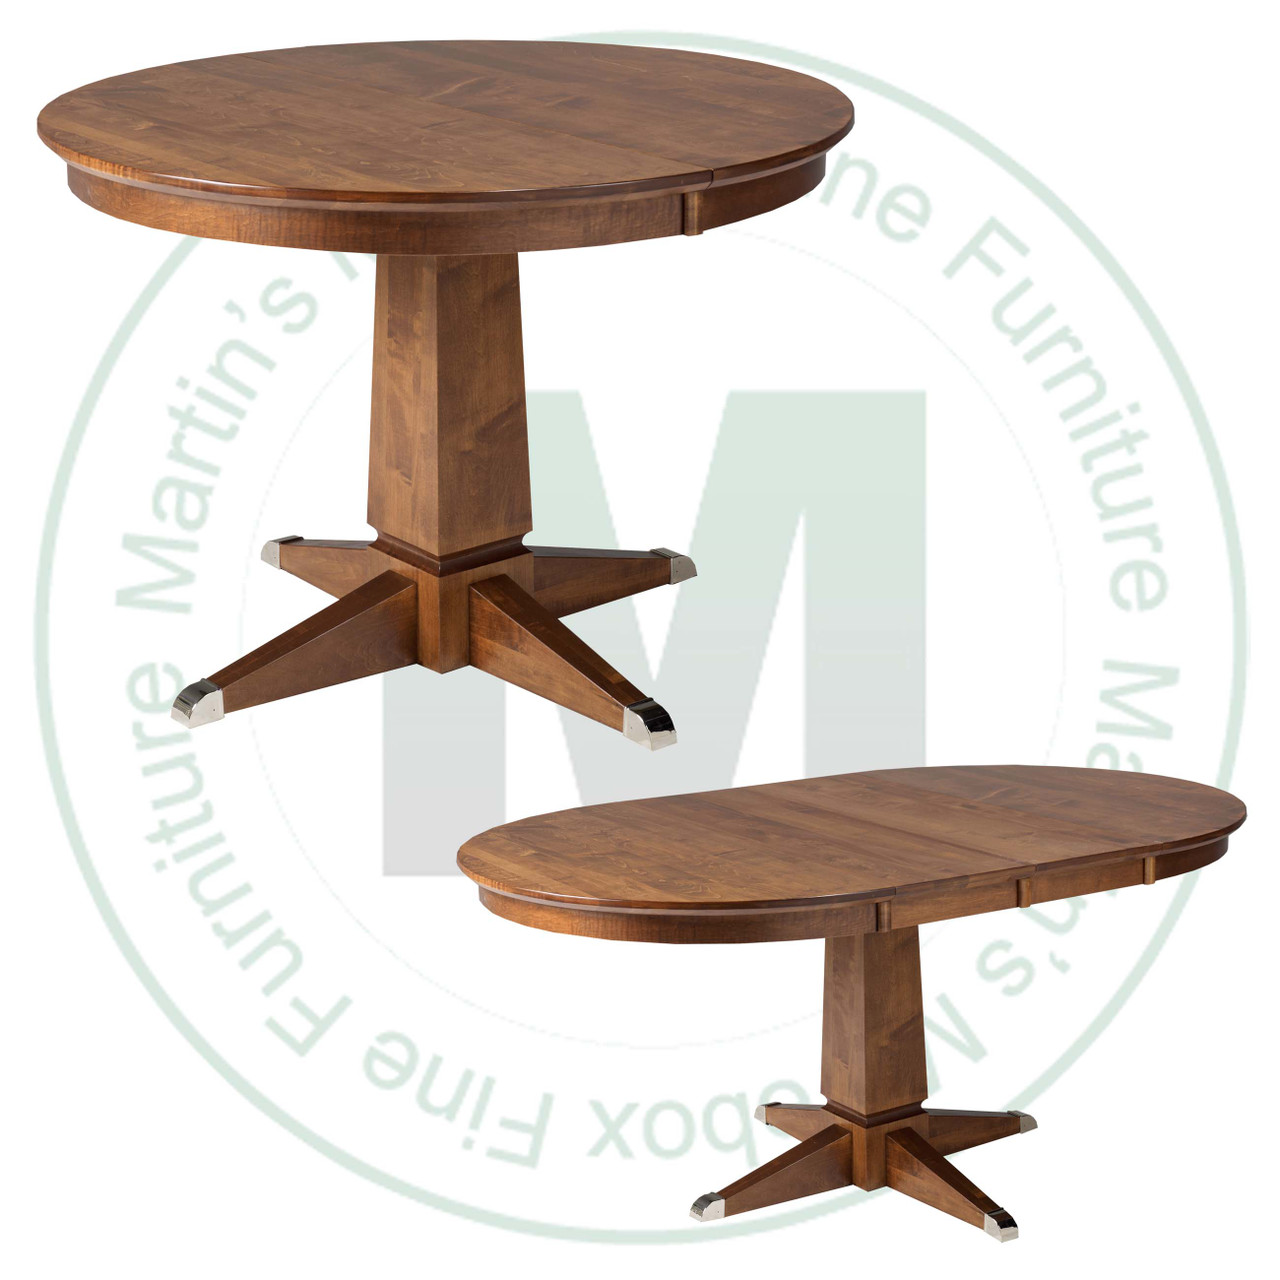 Wormy Maple Danish Single Pedestal Table 42''D x 48''W x 30''H With 1 - 12'' Leaf